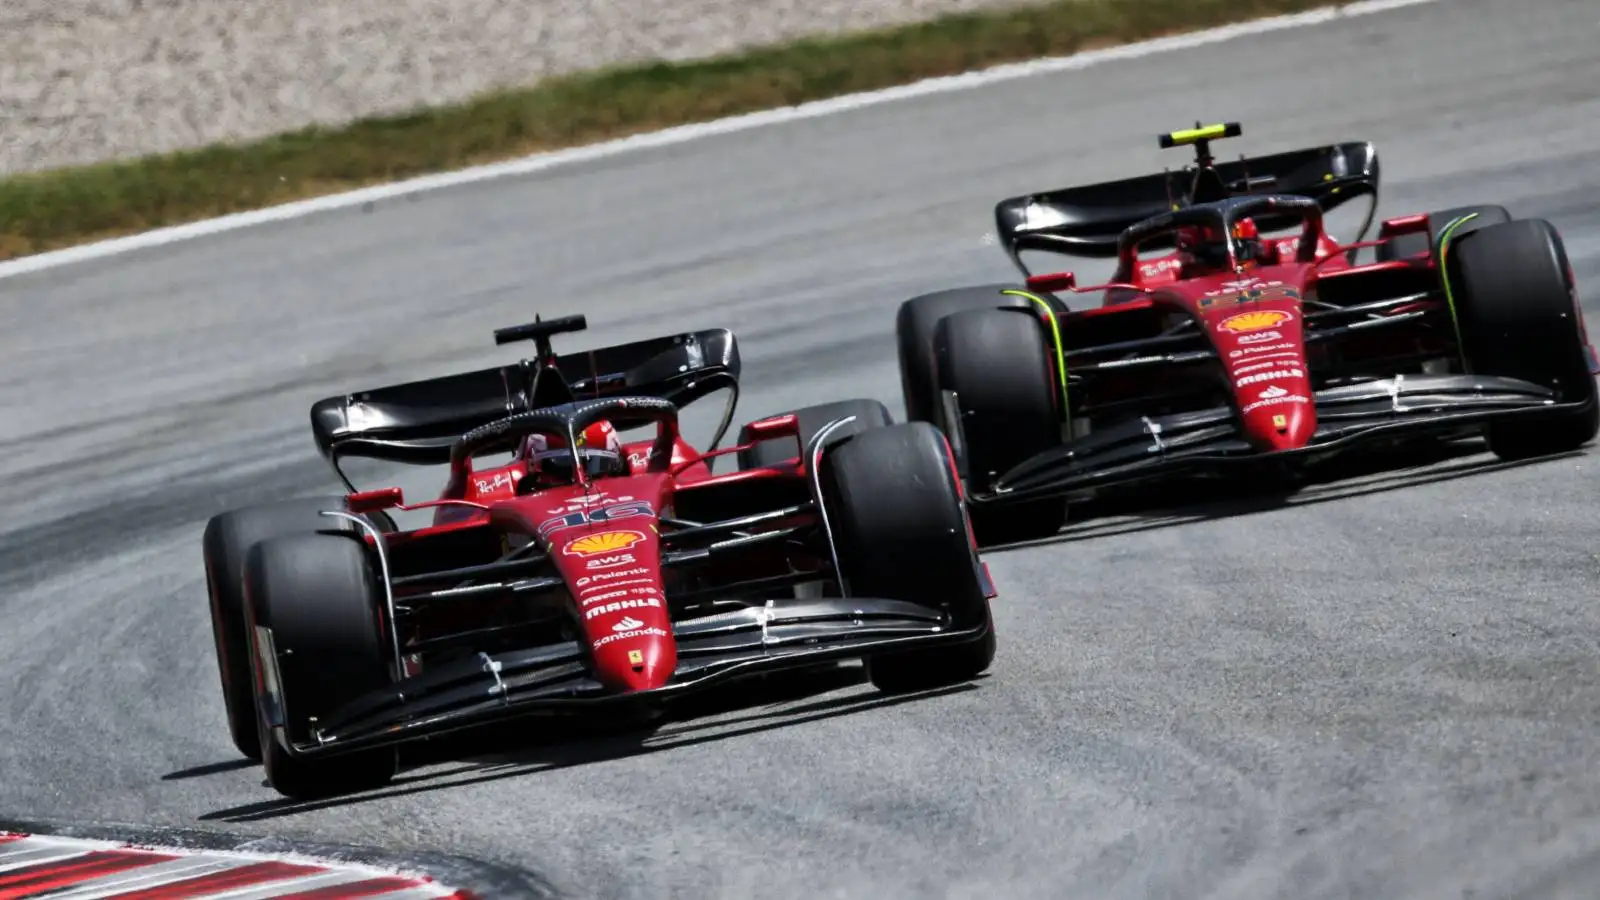 Ferrari duo Charles Leclerc and Carlos Sainz on Spanish GP qualifying day. Barcelona May 2022.